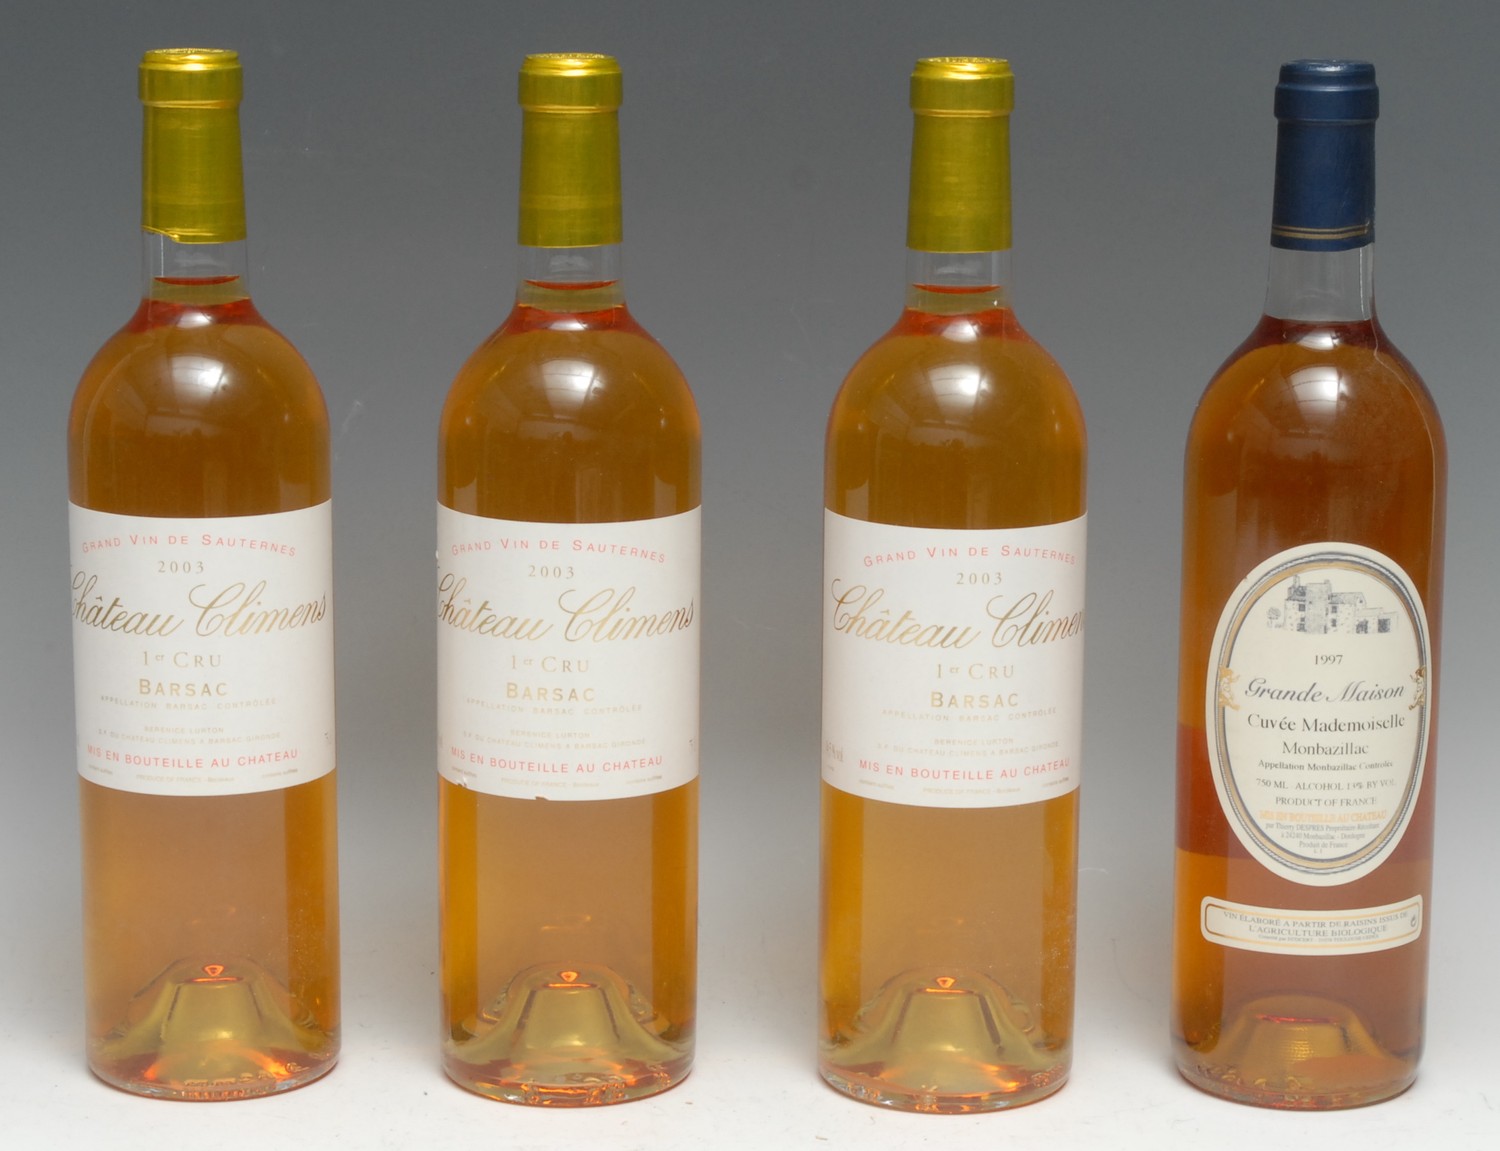 Three bottles of Château Climens 2003 Premier Cru Barsac Sauternes, 75cl, 14.5%, labels generally